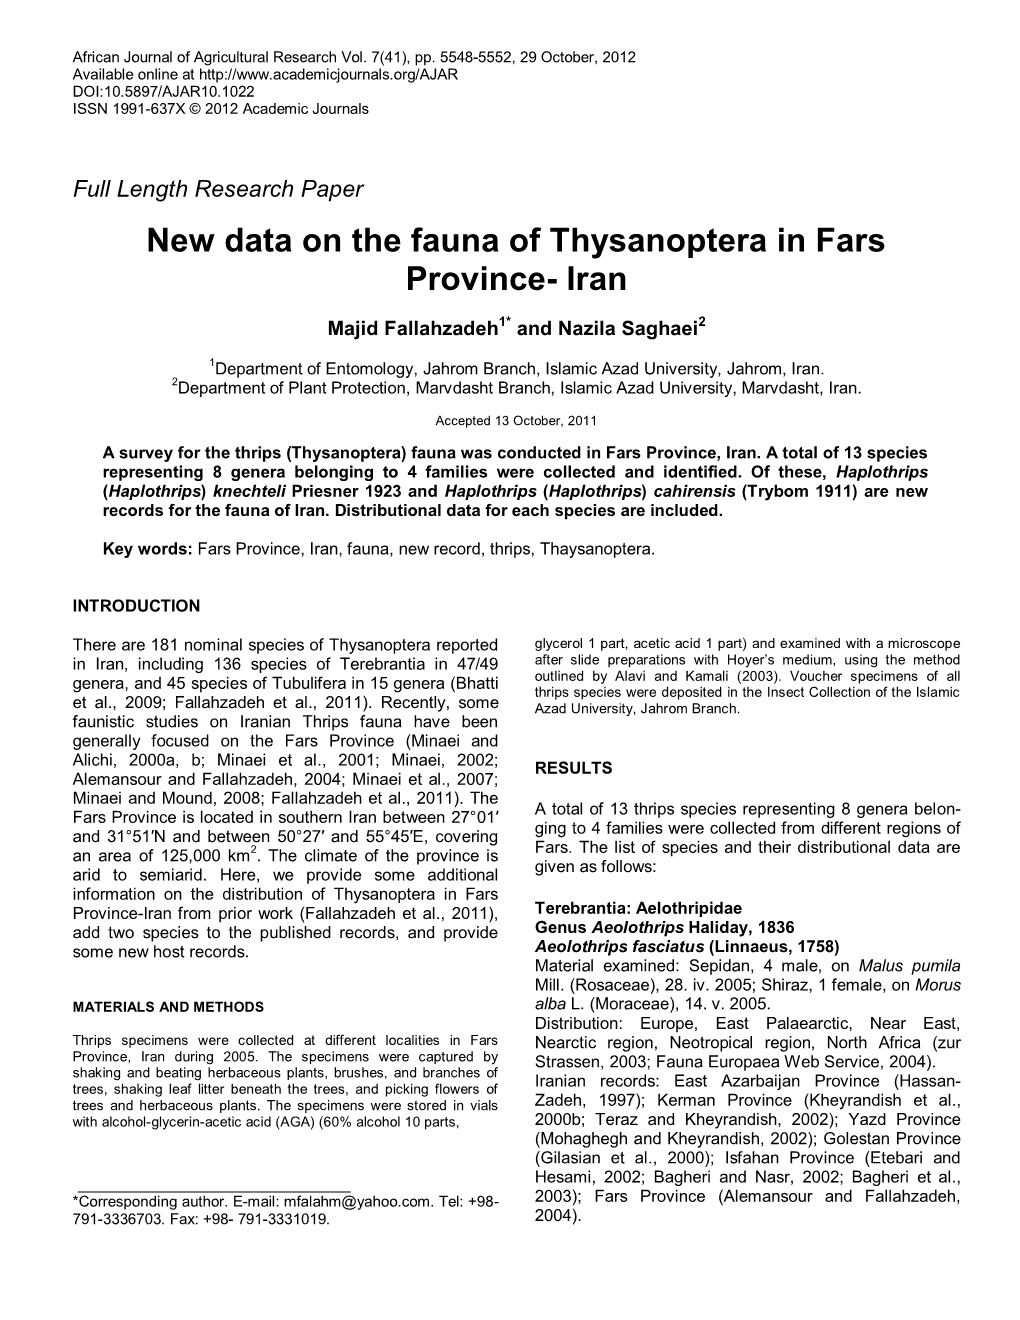 New Data on the Fauna of Thysanoptera in Fars Province- Iran